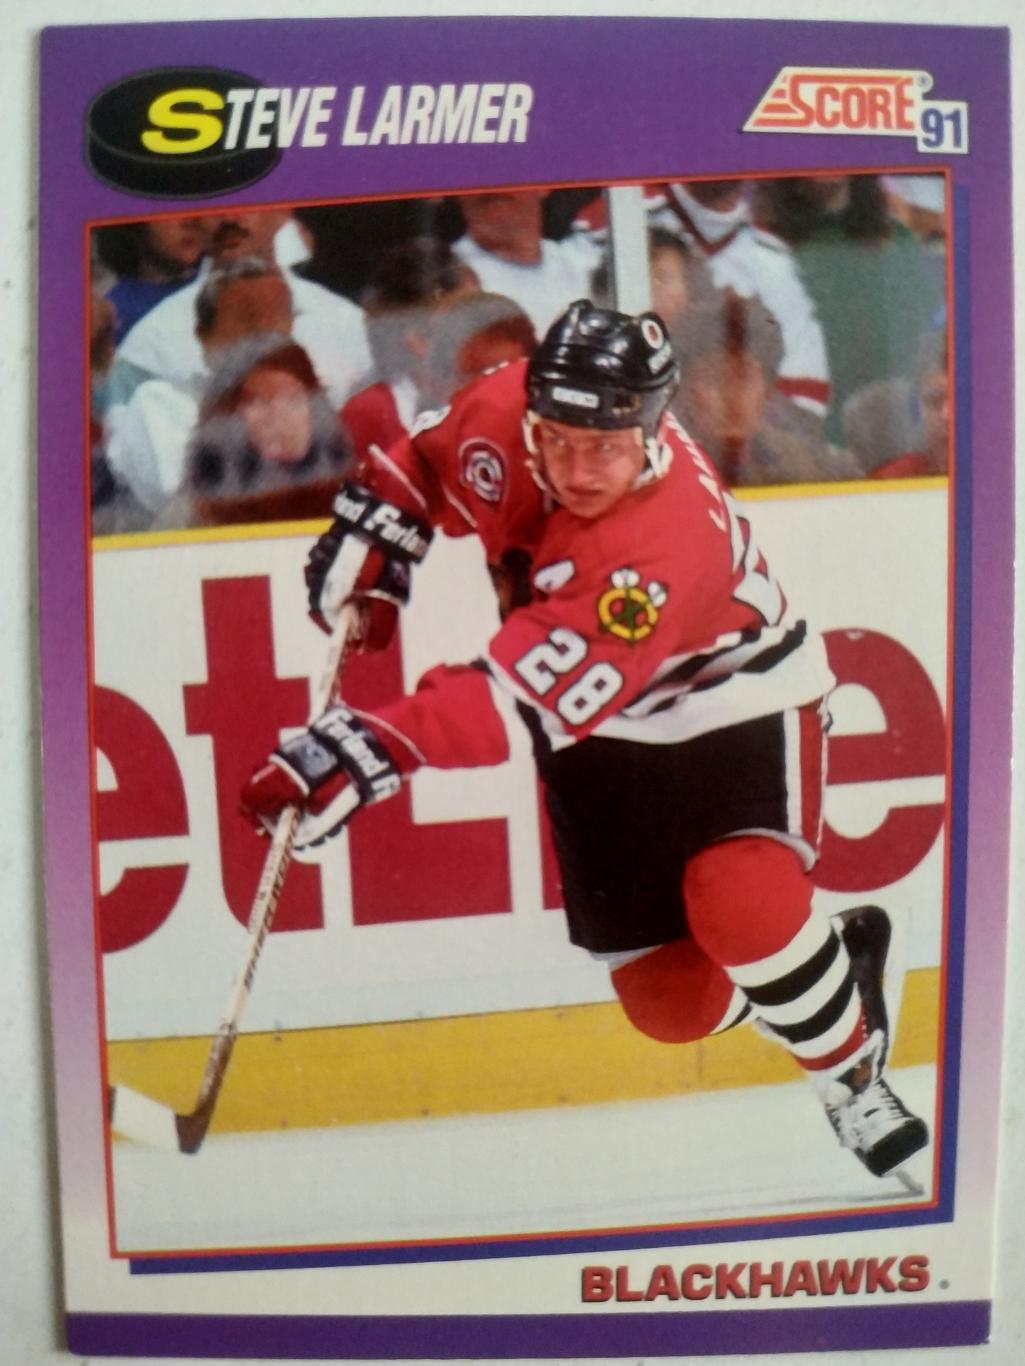 ХОККЕЙ КАРТОЧКА НХЛ SCORE 1991 NHL STEVE LARMER CHICAGO BLACKHAWKS #140